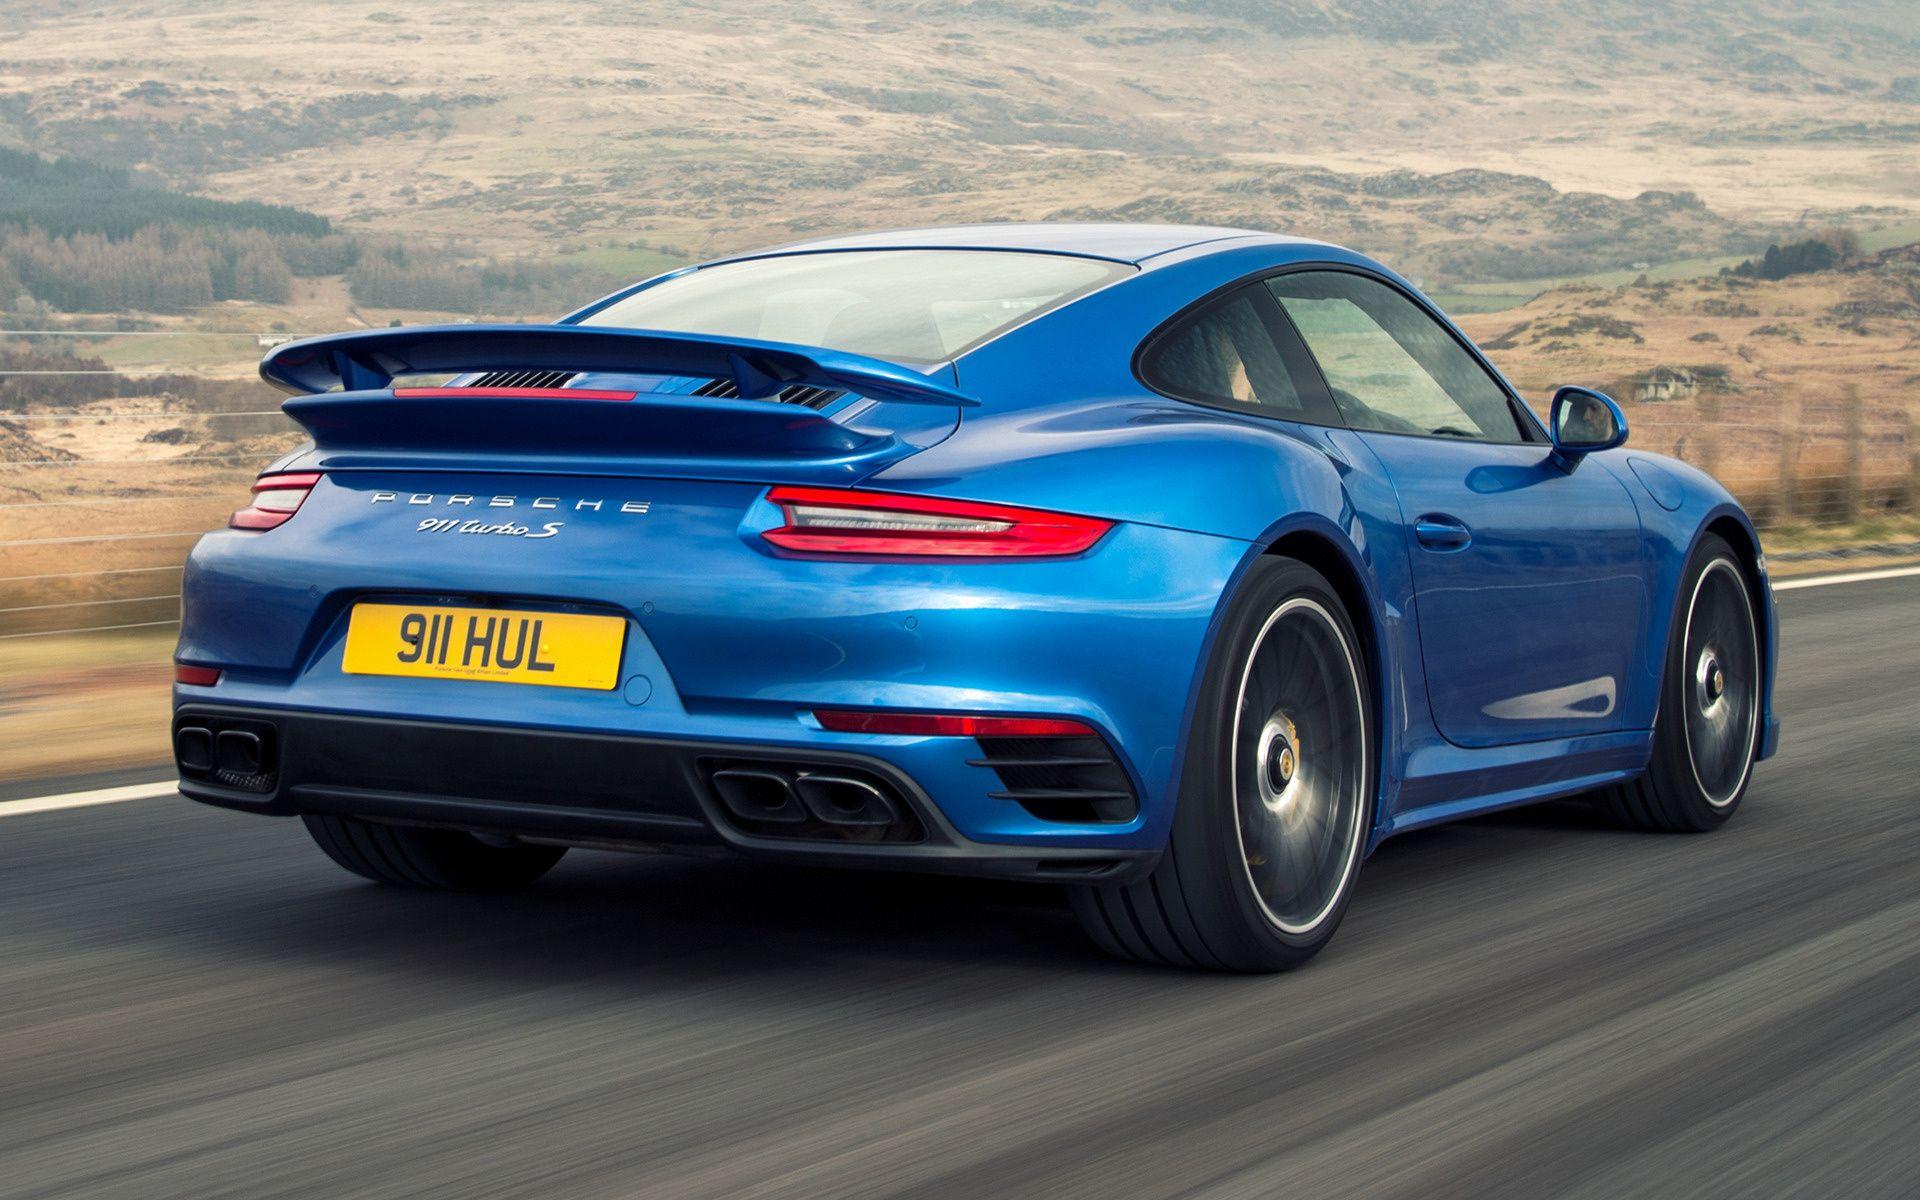 Download New 2016 Porsche 911 Turbo S Wallpaper For iPhone #svl